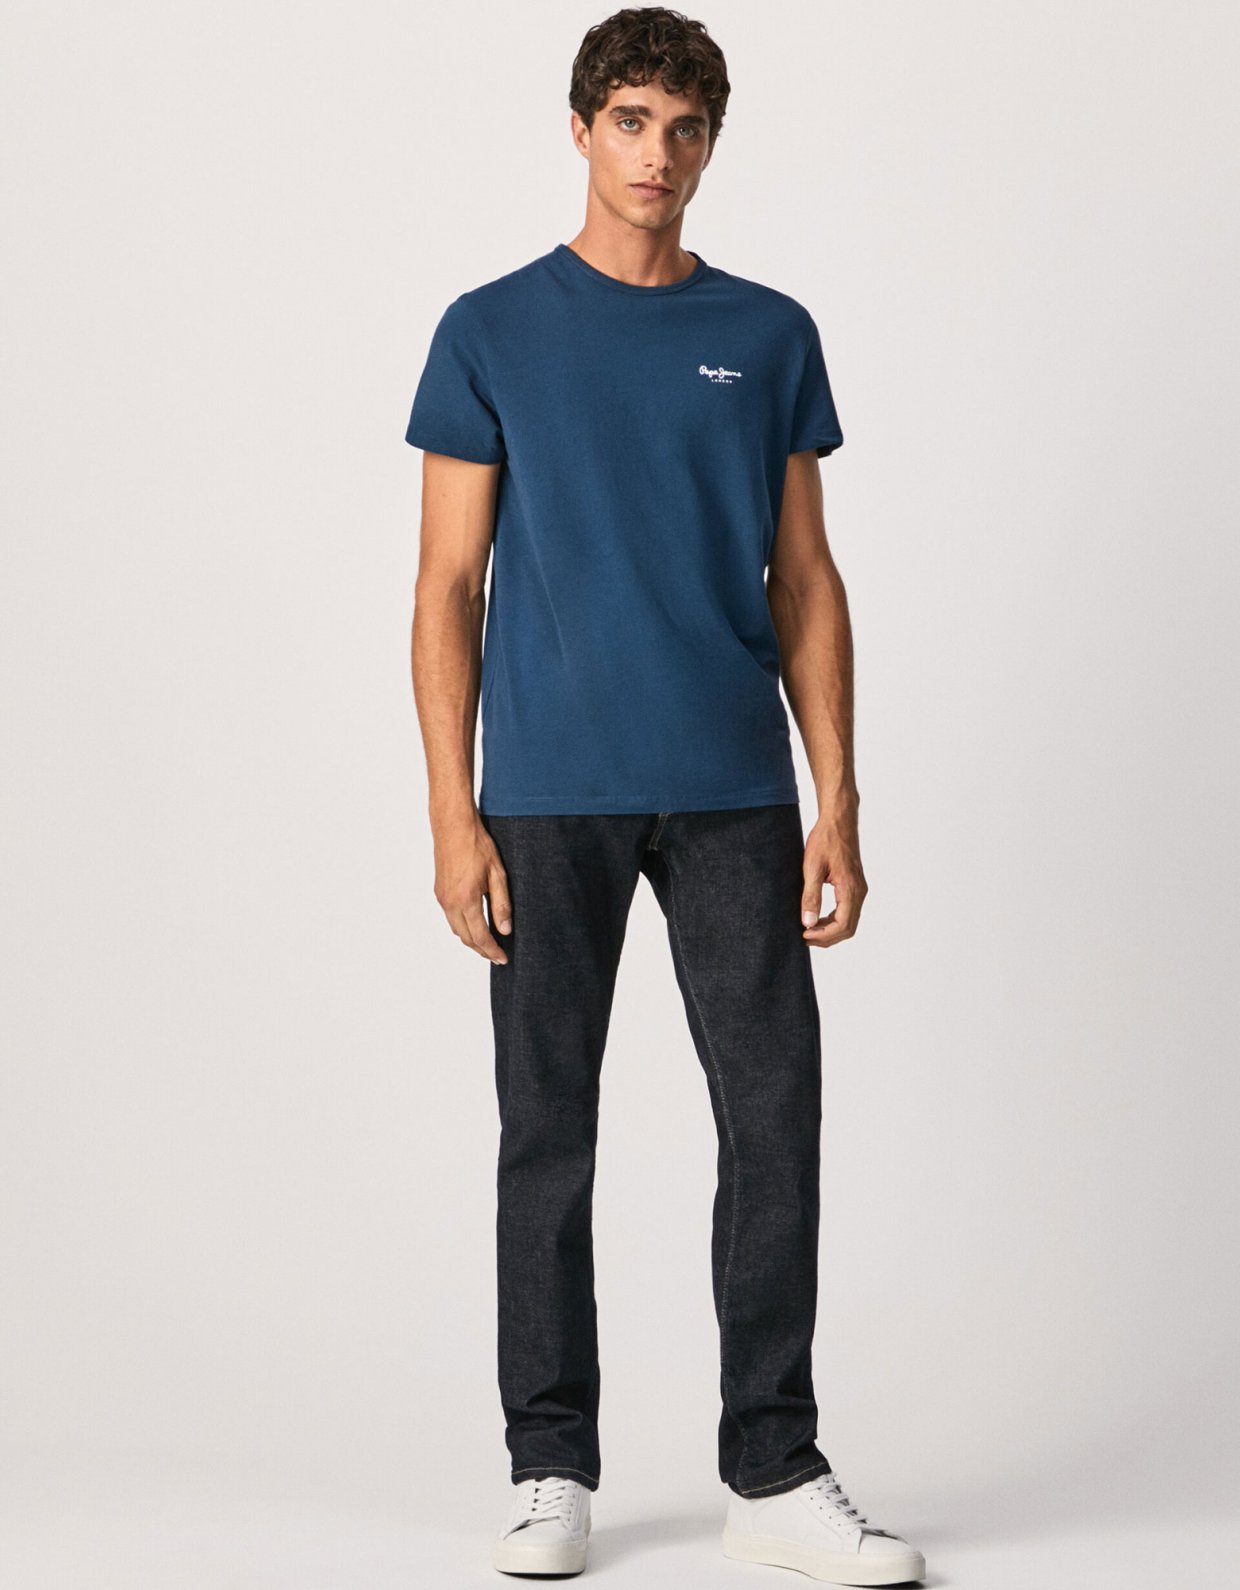 Pepe Jeans Original basic S/S t-shirt navy